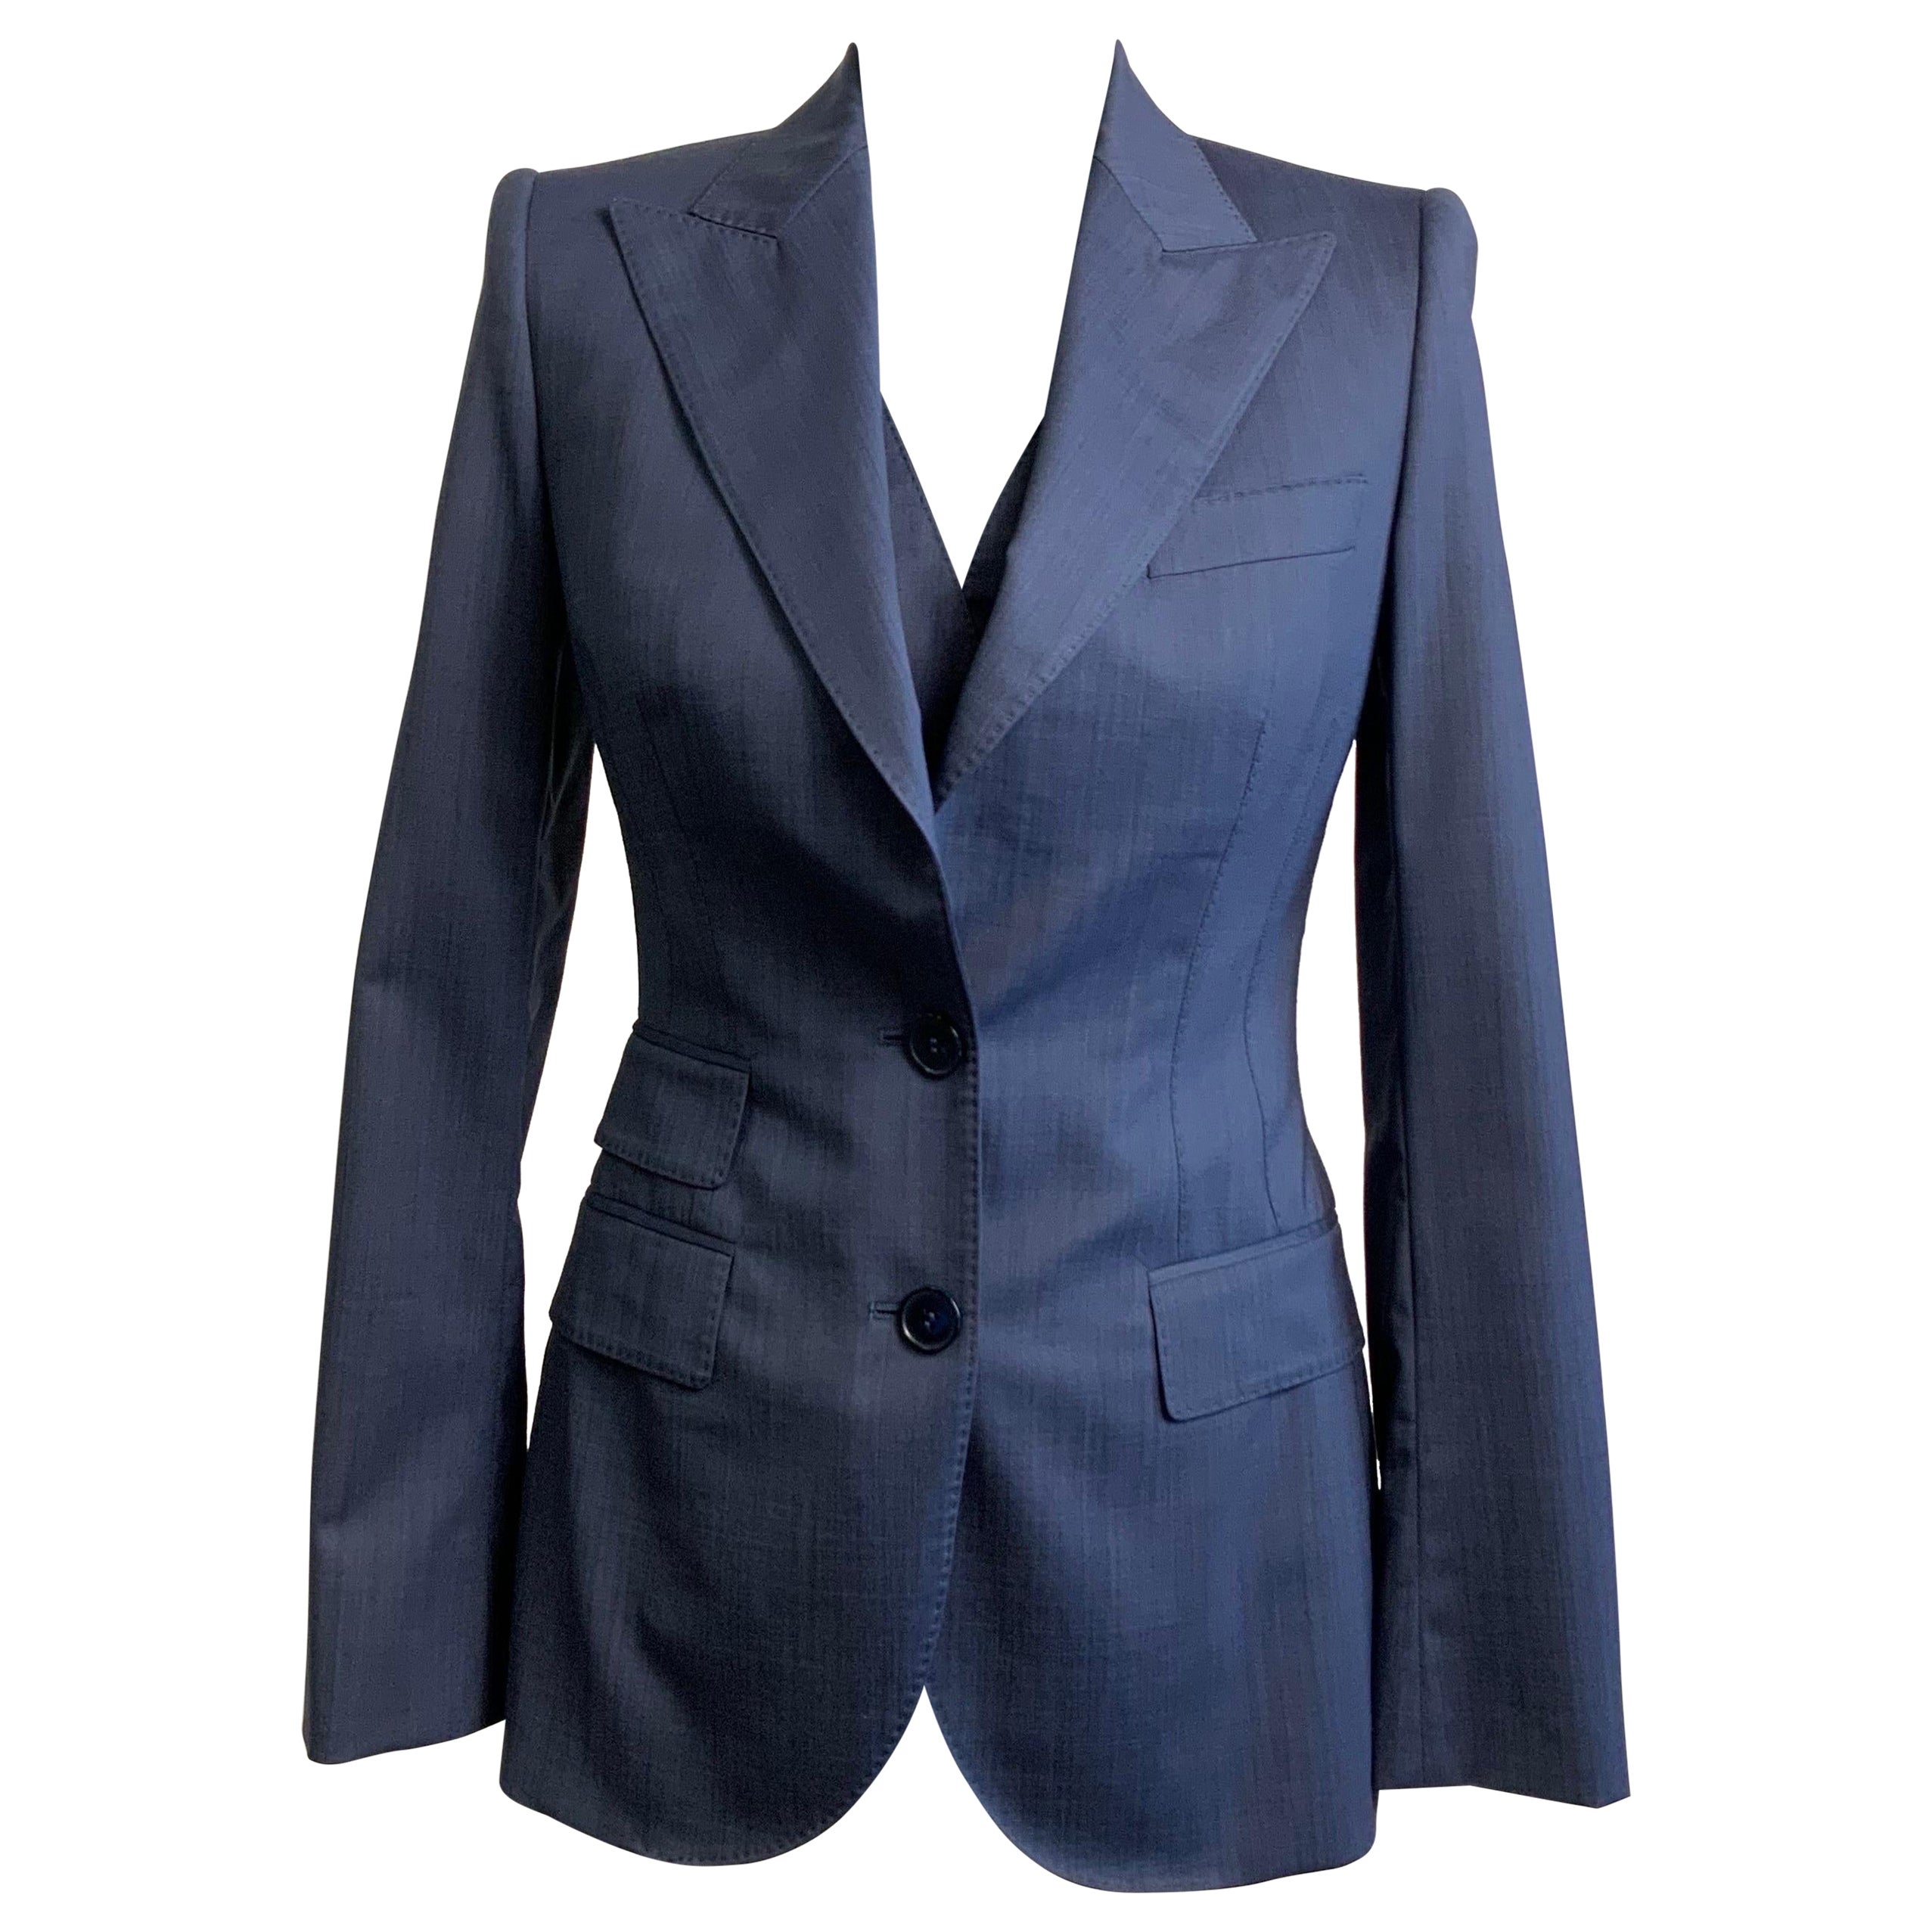 Dolce and Gabbana blue jacket + vest set.